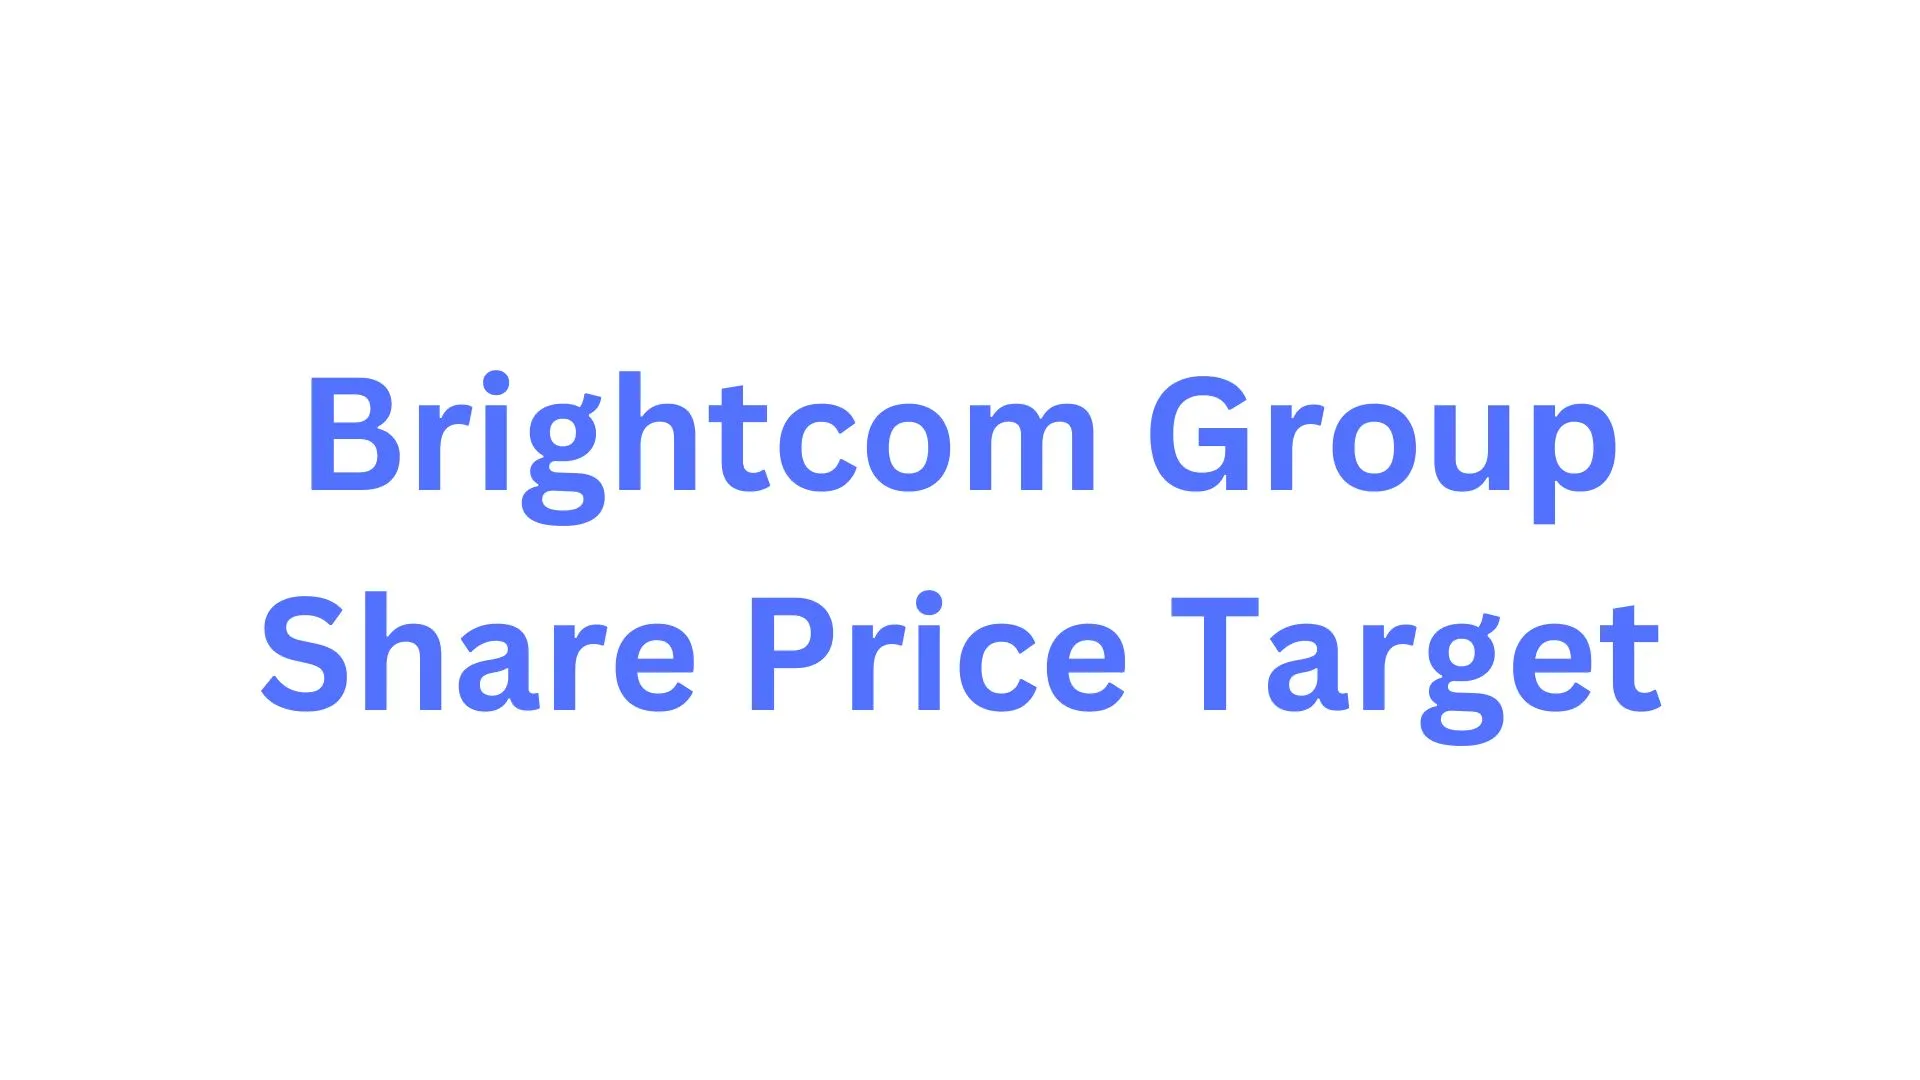 Brightcom Group Share Price Target